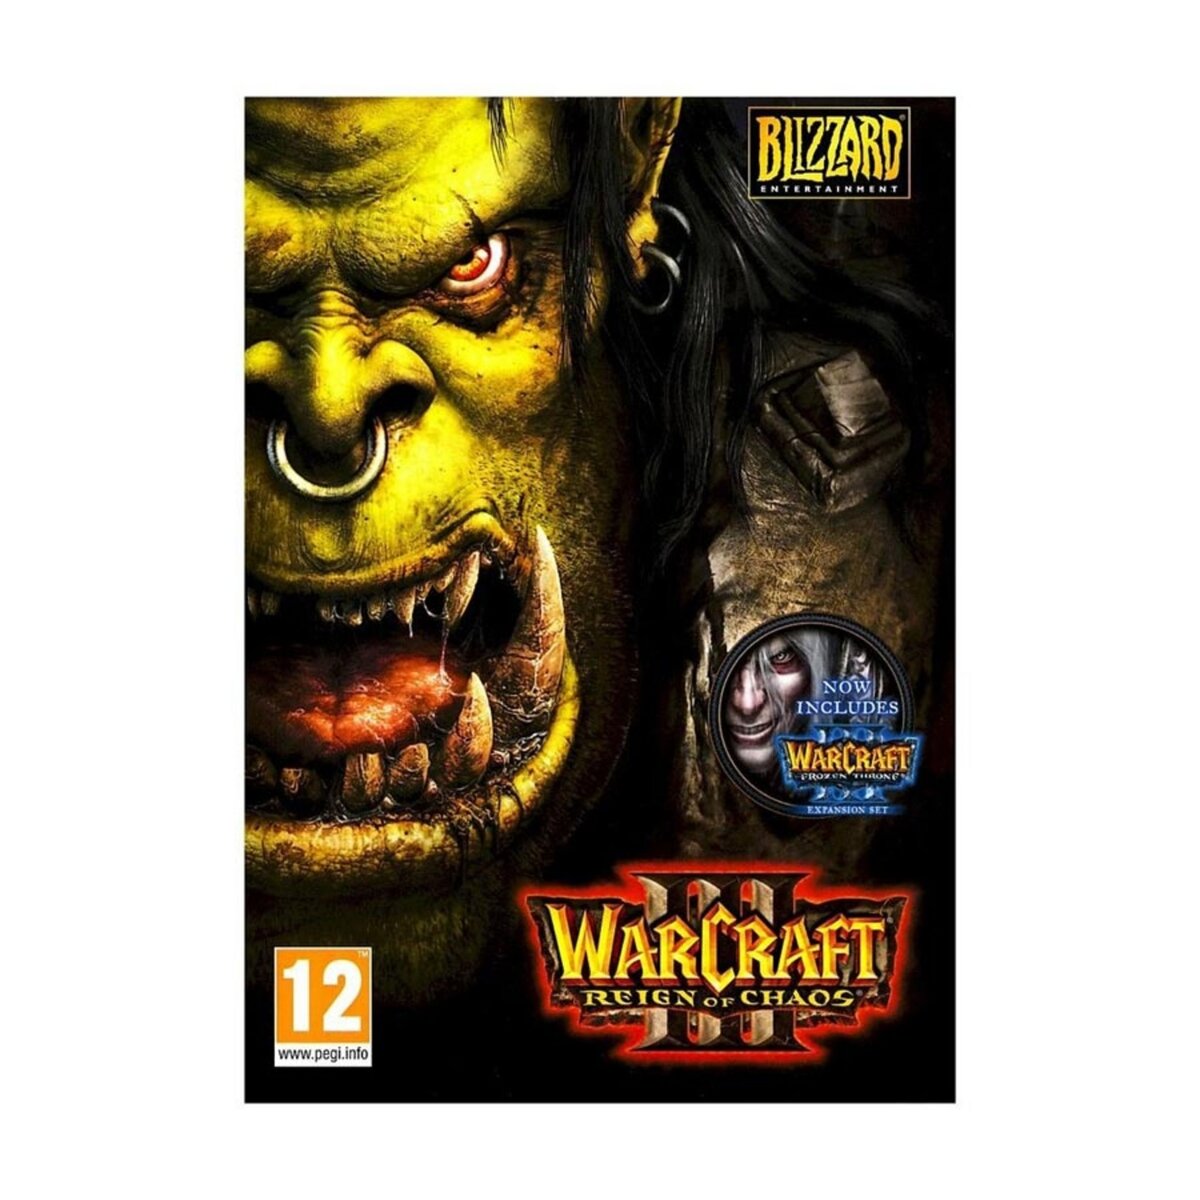 Warcraft 3 Gold Edition